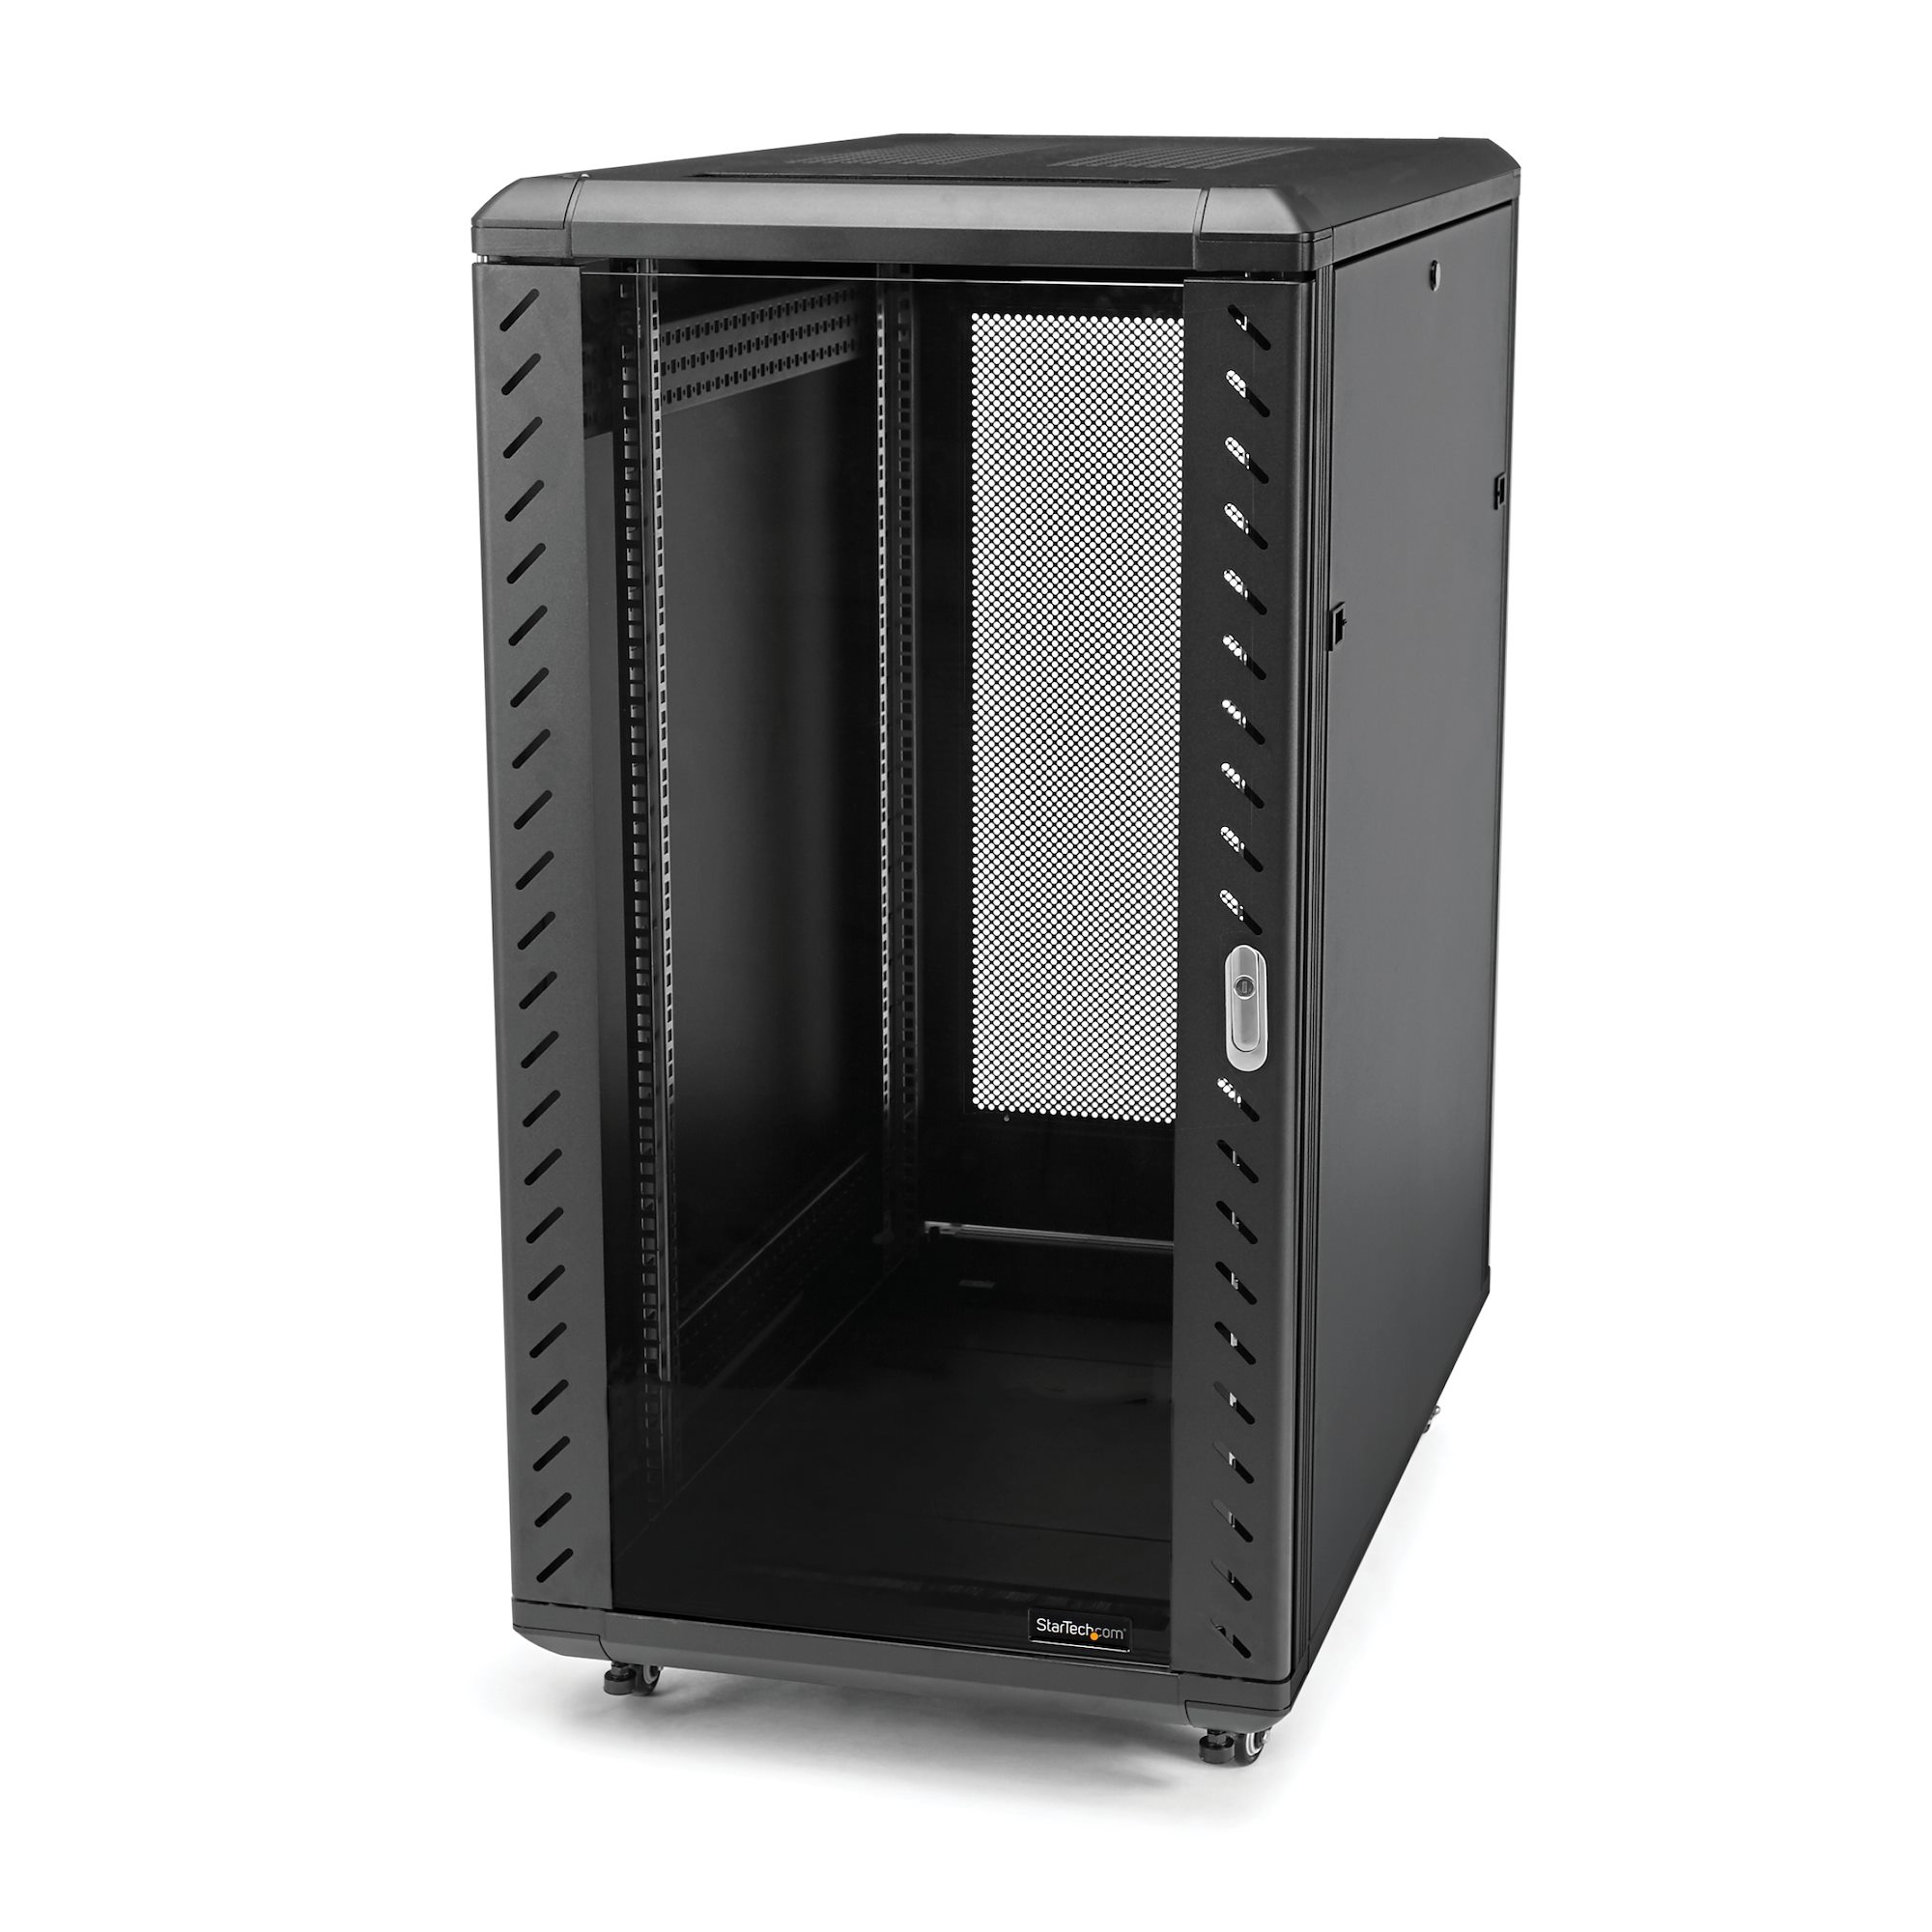 StarTech.com 32U 19" Server Rack Cabinet, Adjustable Depth 6-32 Inch, Lockable 4-Post Network/Data/AV Equipment Rack Enclosure W/ Glass Door & Casters, Flat Pack, 1763lb/800kg Capacity - Free - C2000